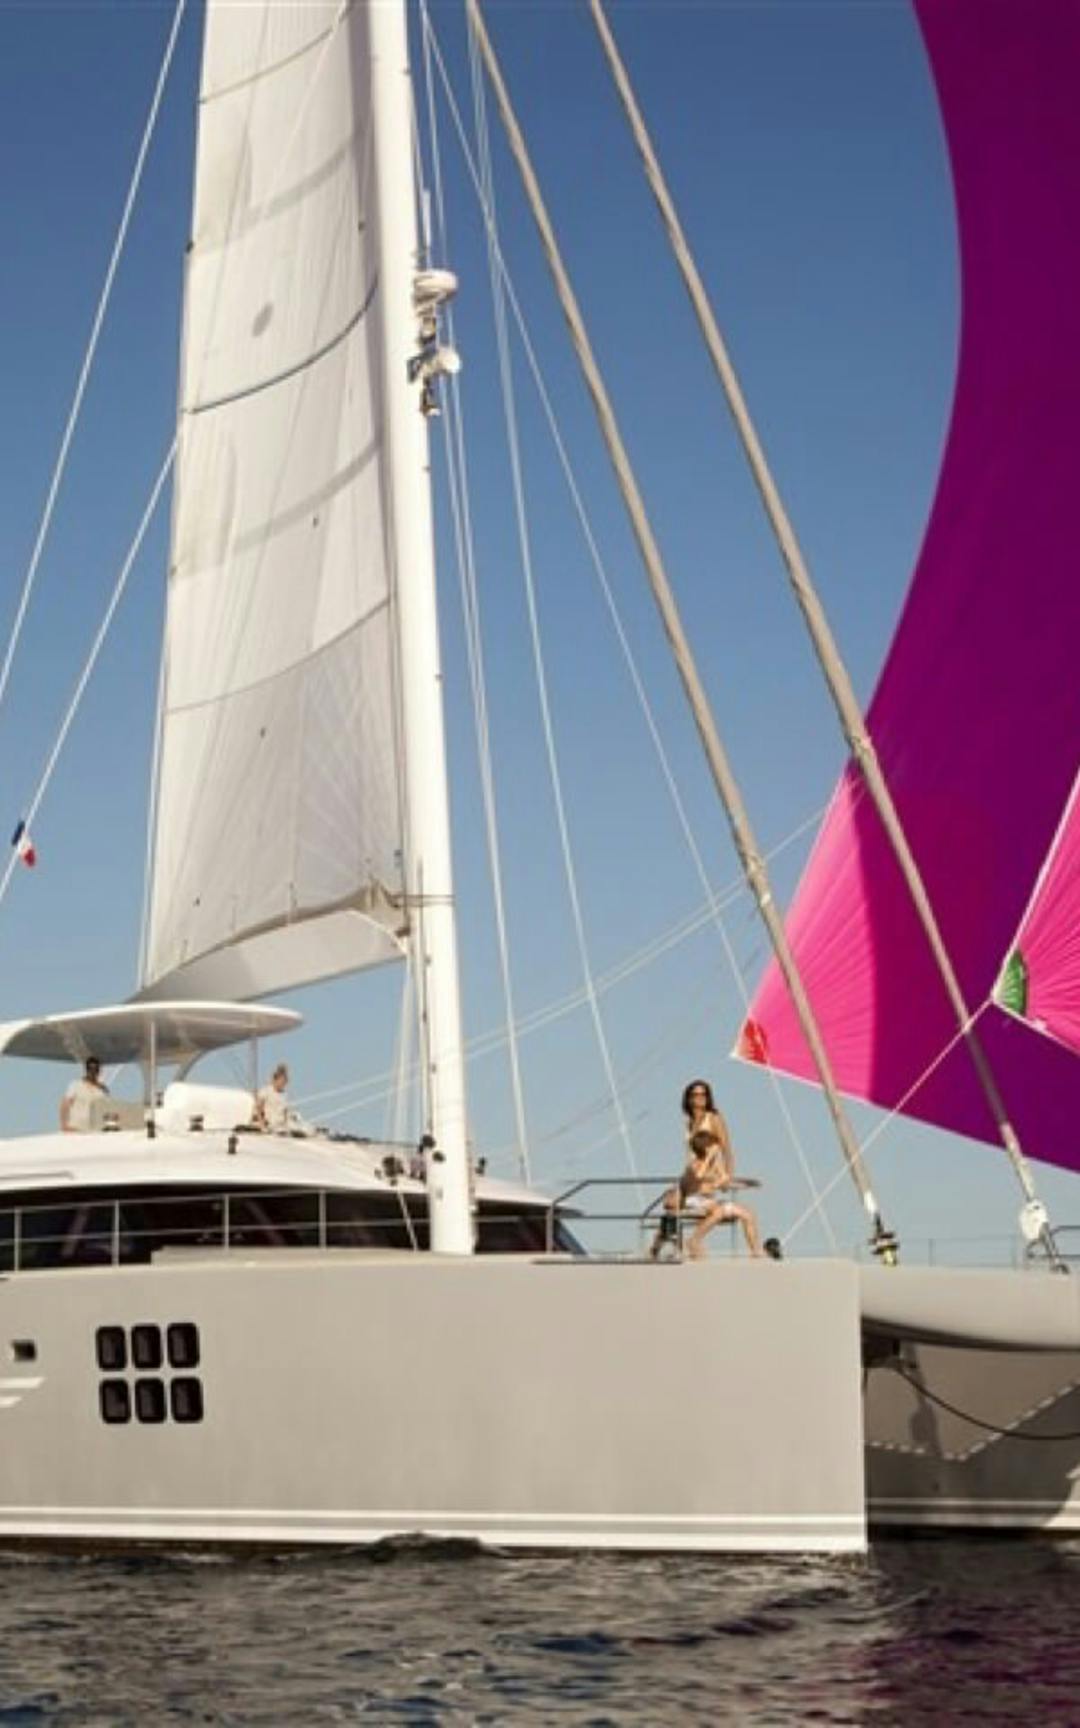 70' Sunreef luxury charter yacht - British Virgin Islands - 2